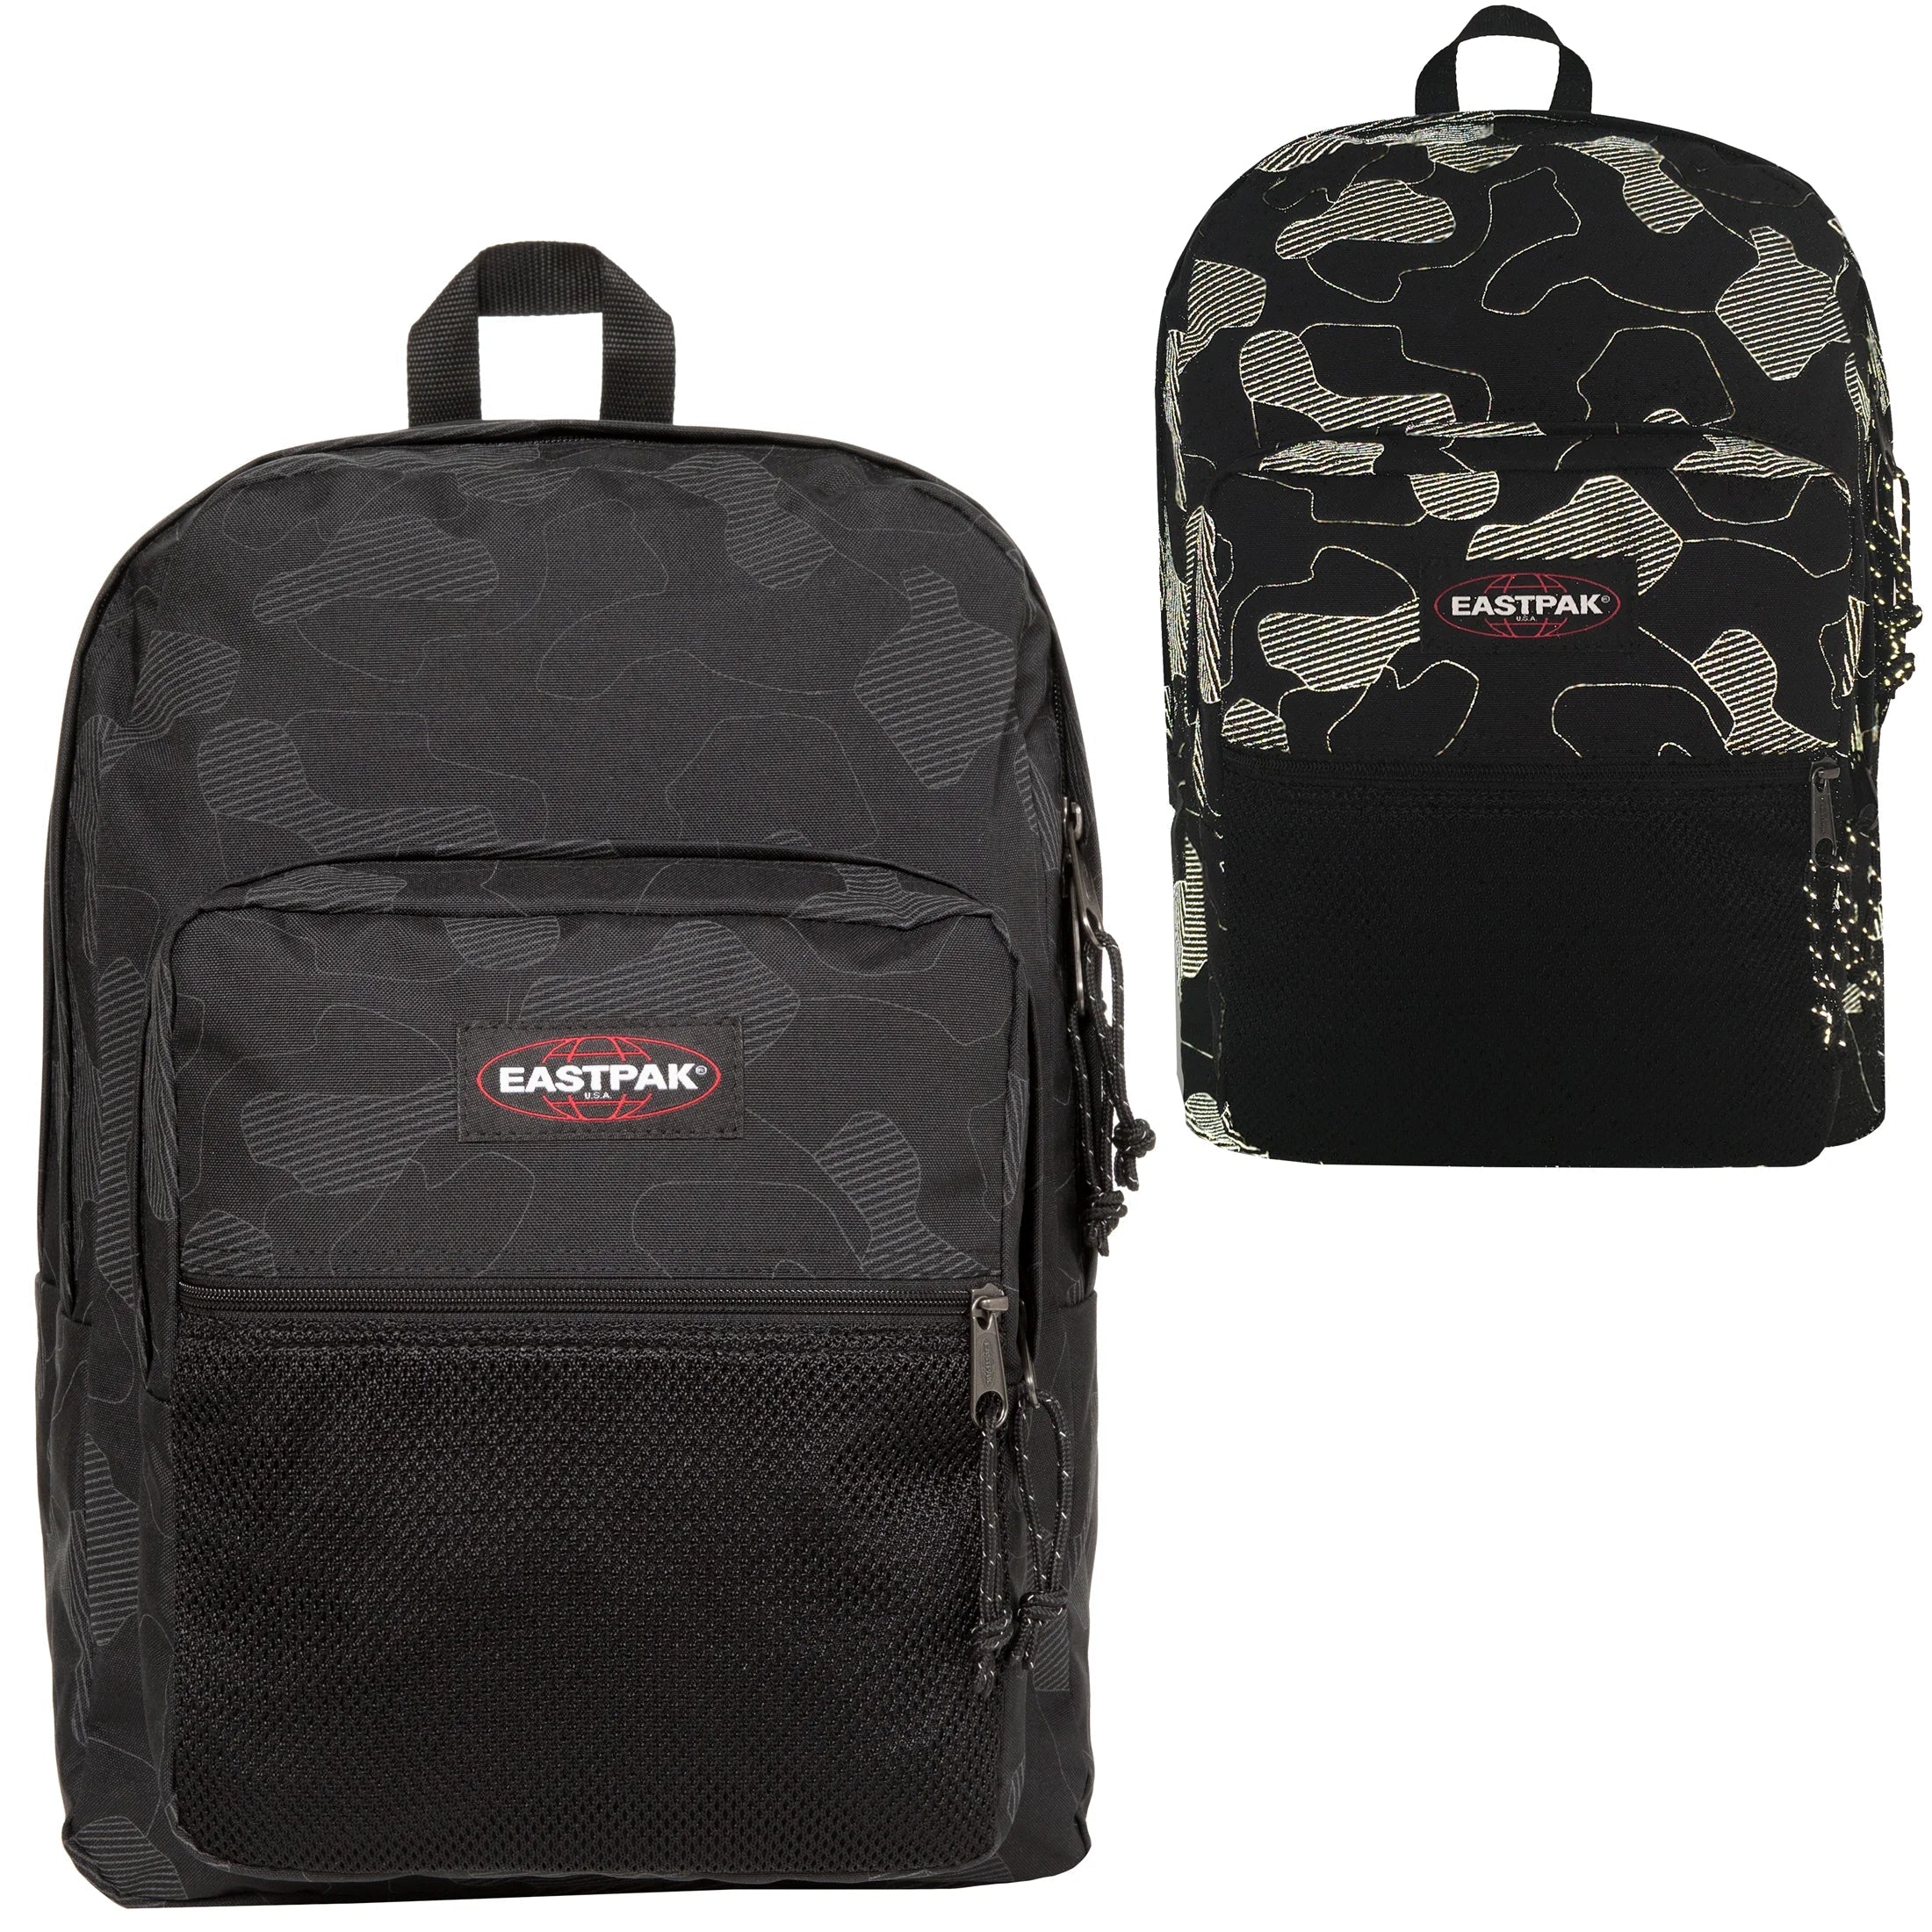 Eastpak Authentic Pinnacle Leisure Backpack 42 cm - Reflective Camo Black